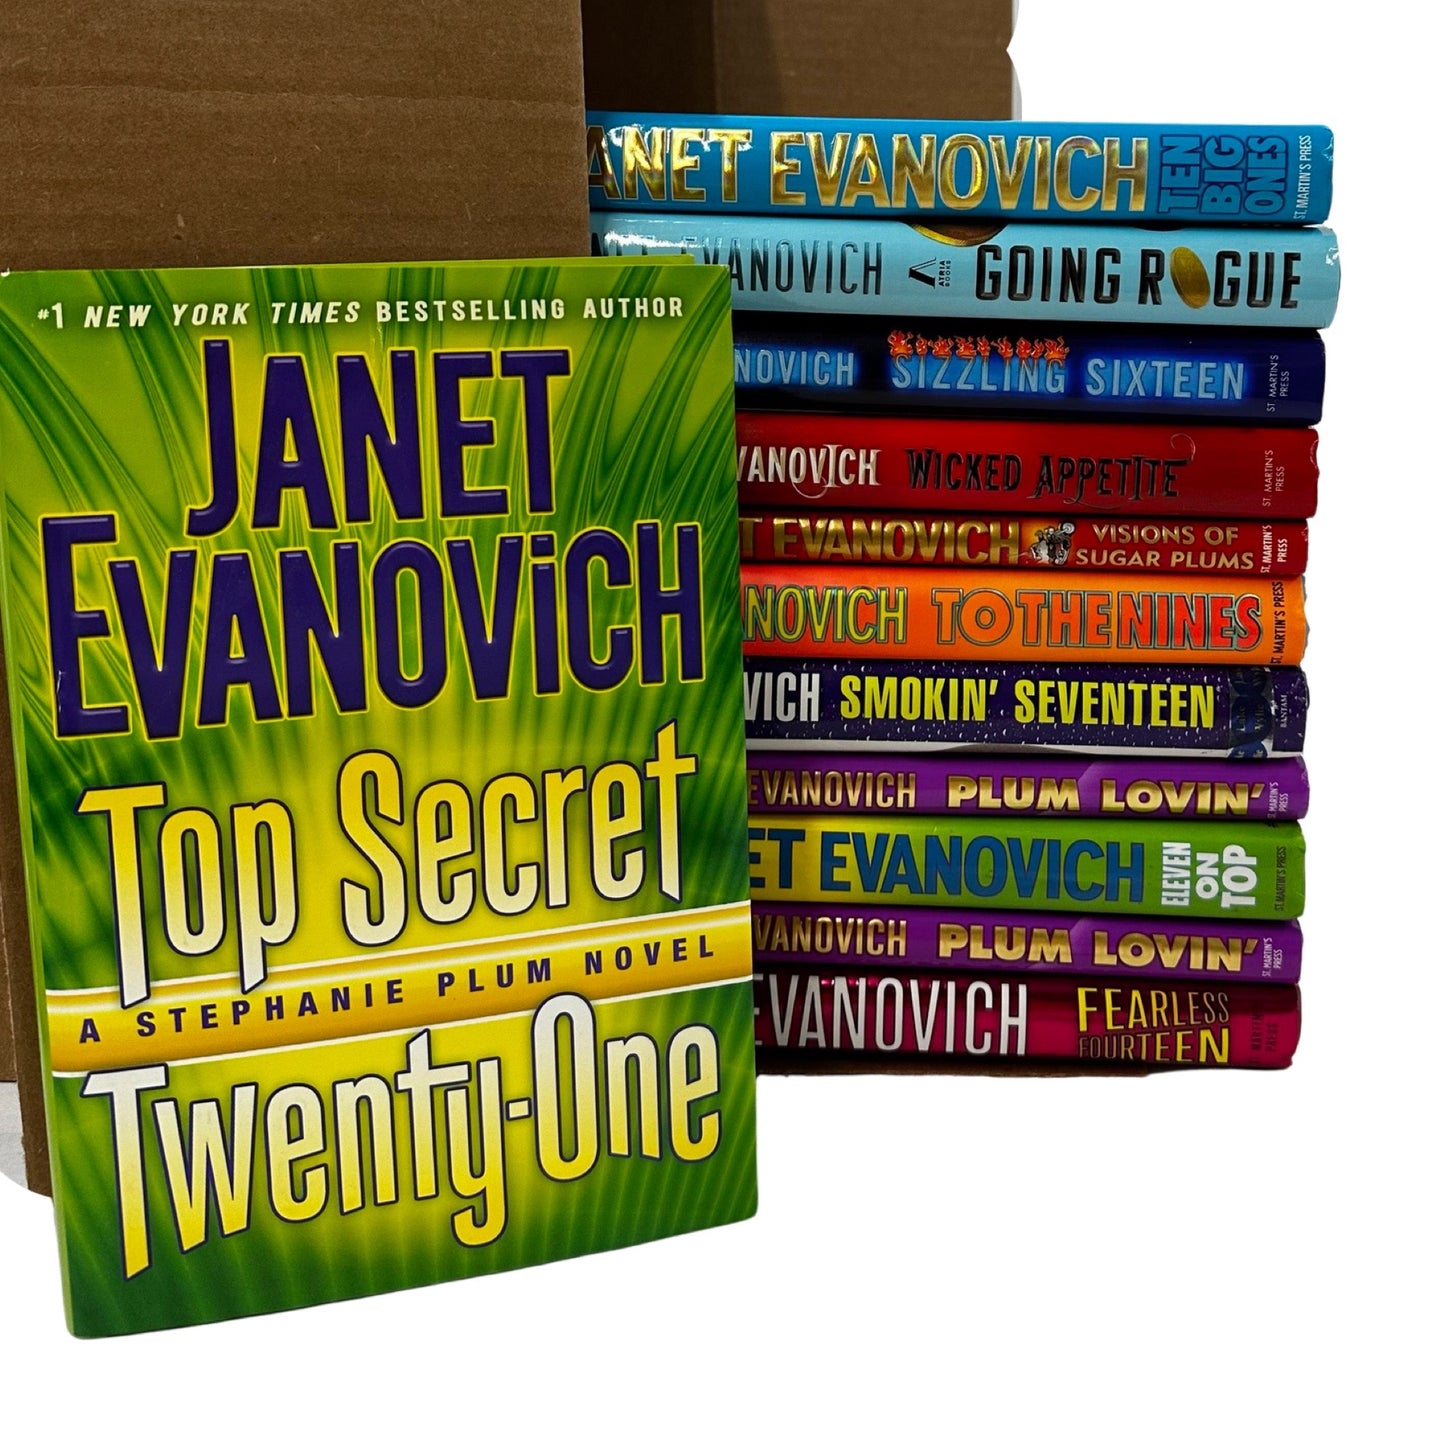 Janet Evanovich books - Hardcovers